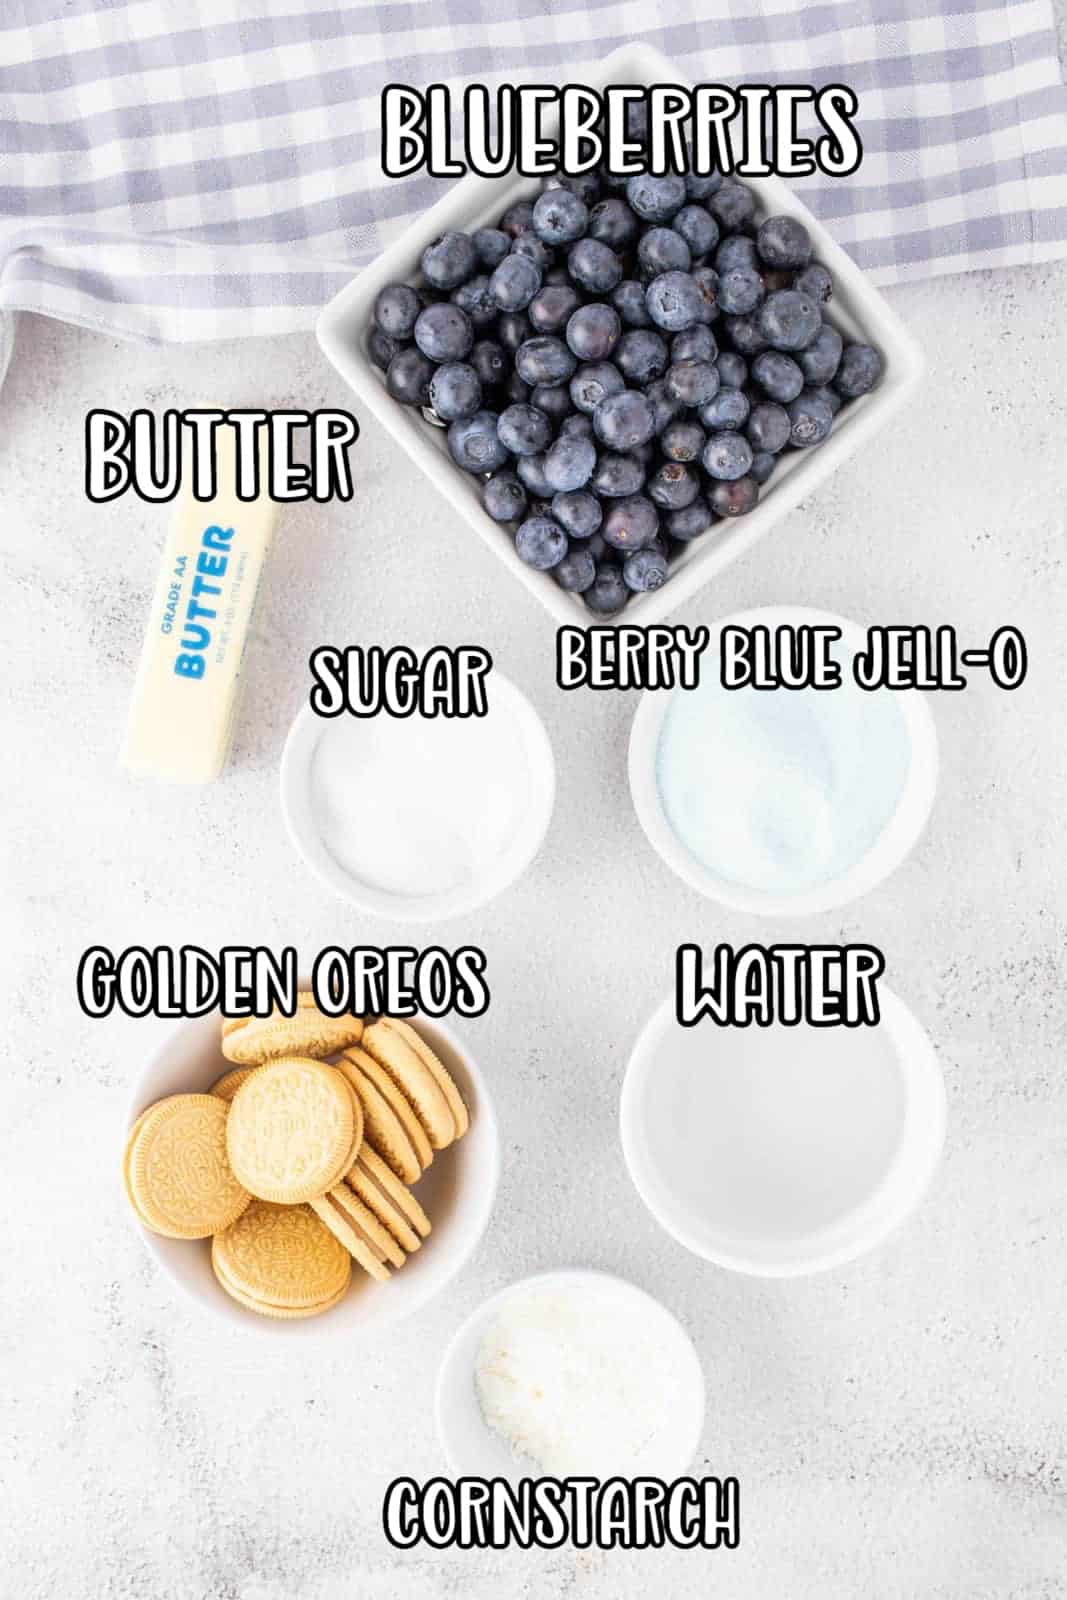 salted butter, blueberries, Golden Oreos, cornstarch, water, sugar, and Berry Blue Jello Gelatin mix.